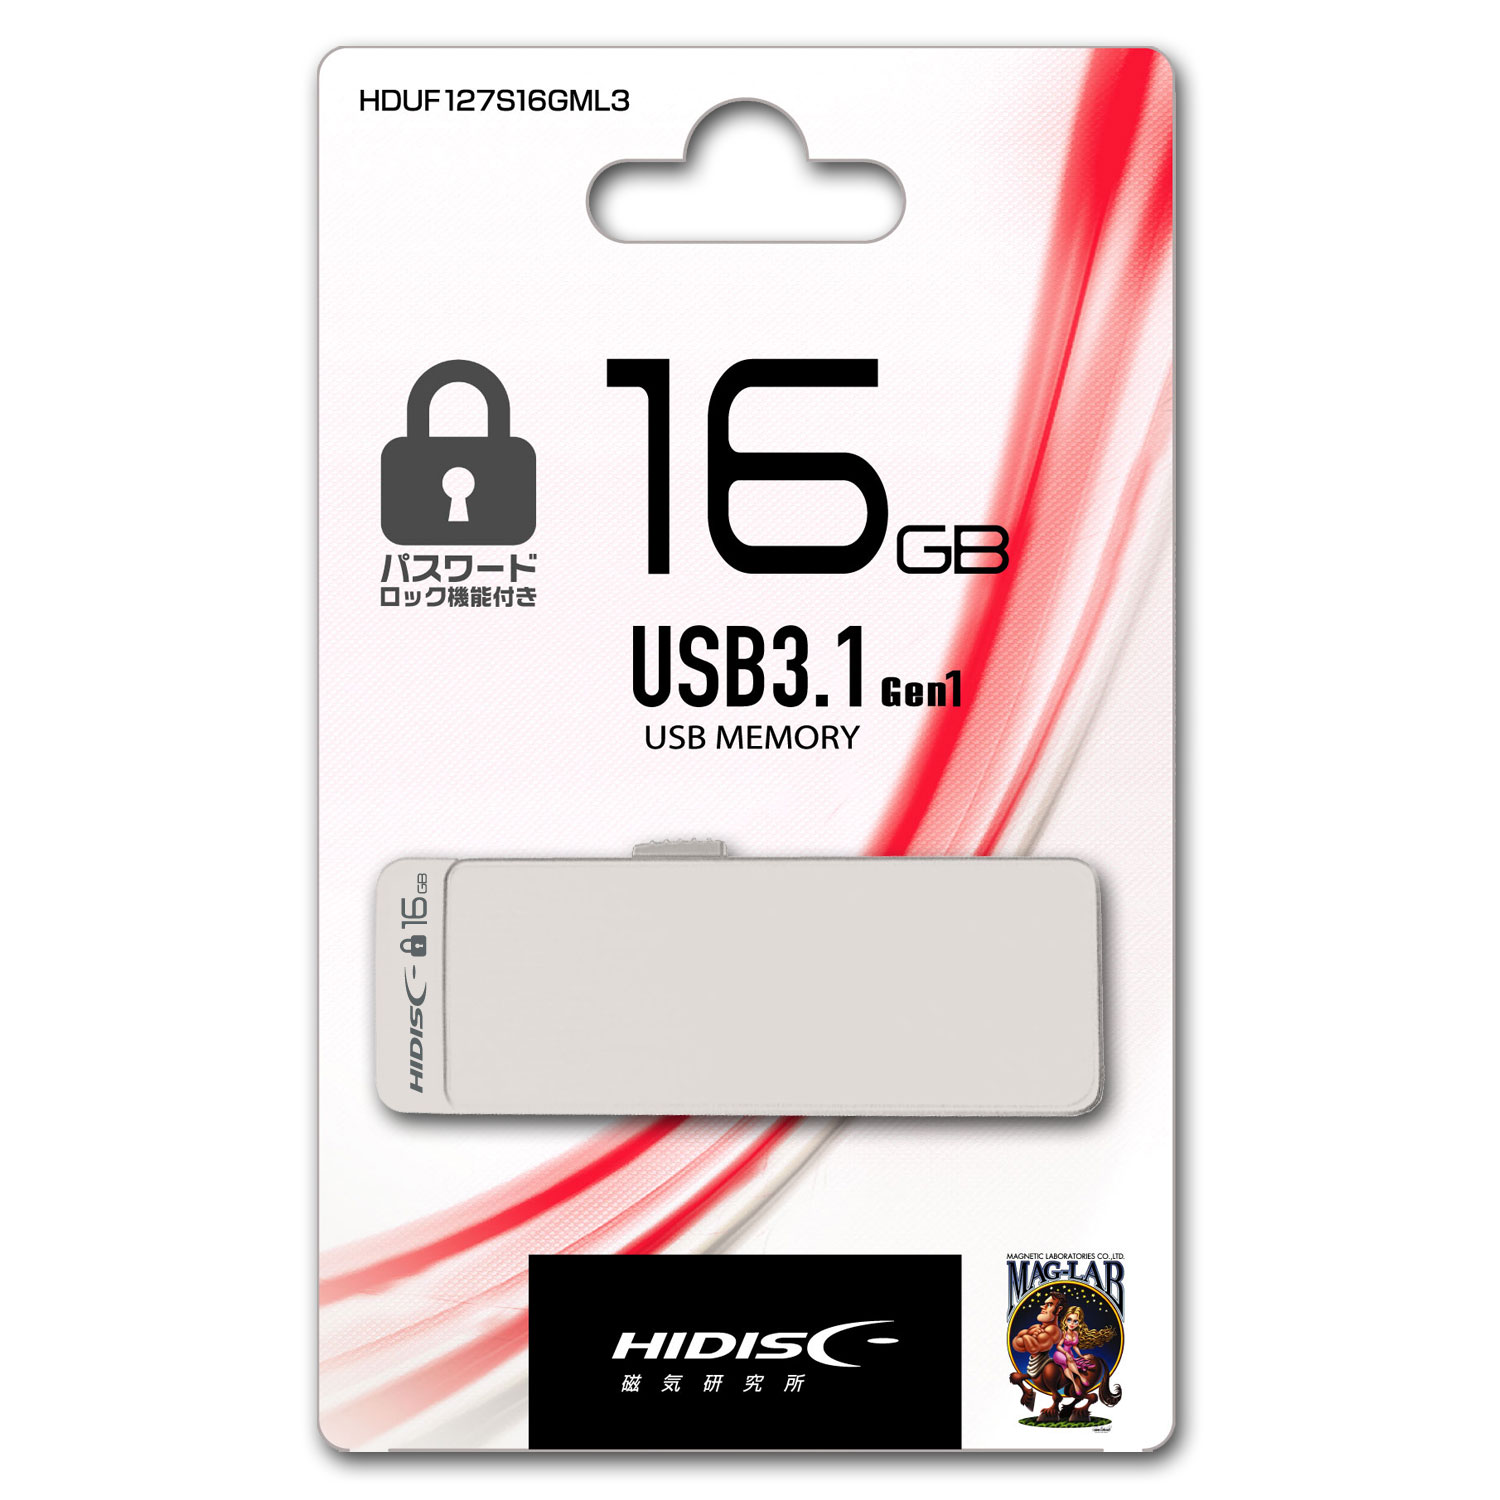 HIDISC USB 3.1, Gen1 パスワードロック機